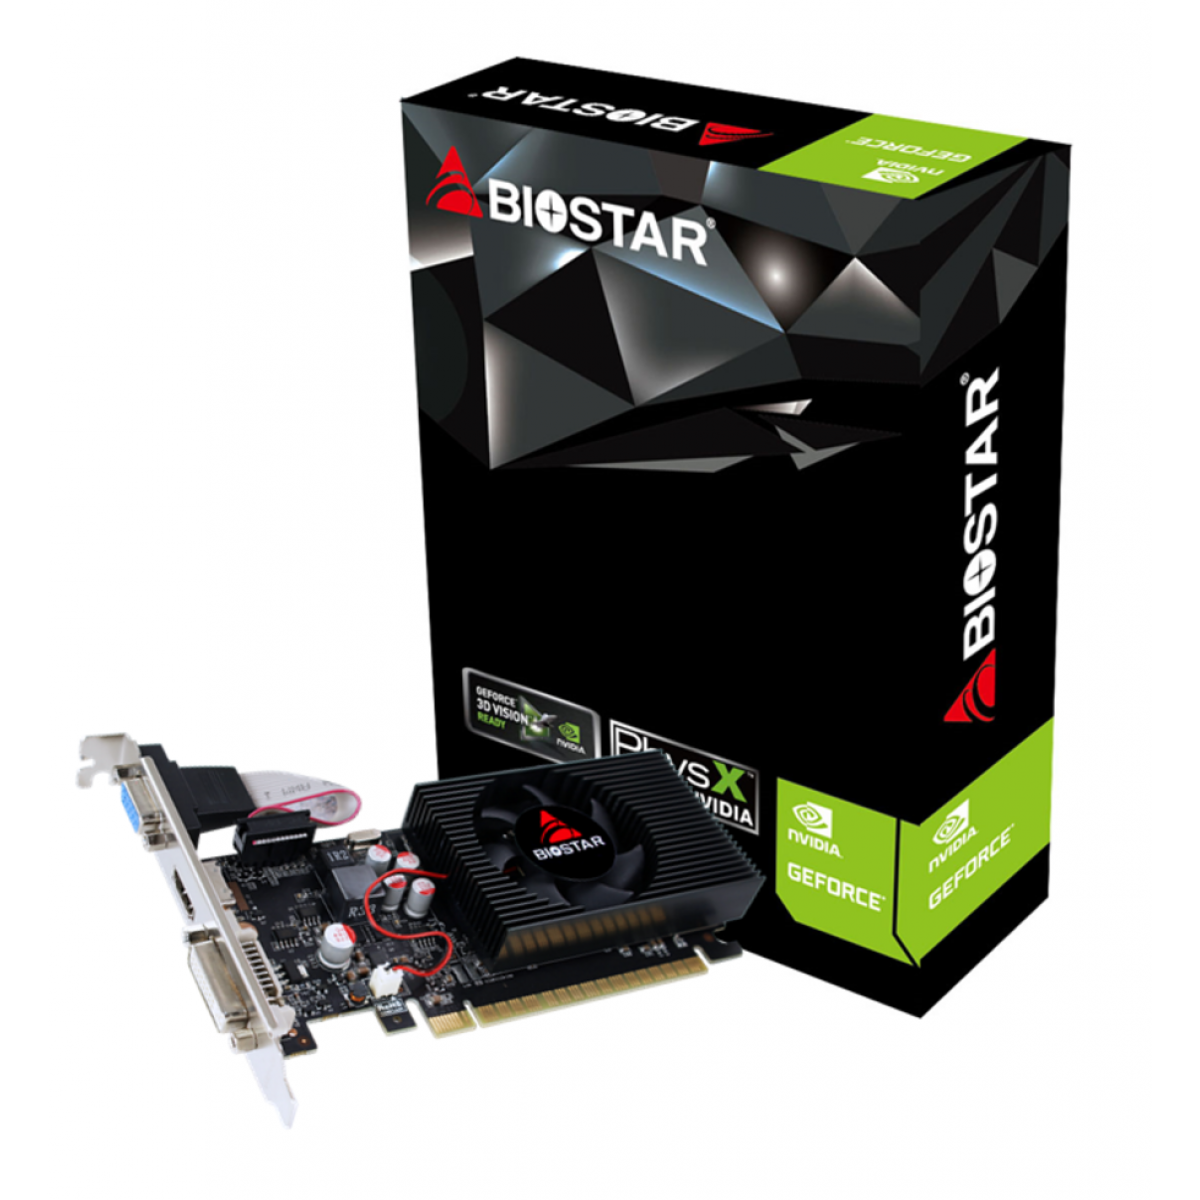 Placa de Vídeo Biostar, GeForce, G210, 1GB, GDDR3, 64bit, VN2103NHG6-TBARL-BS2